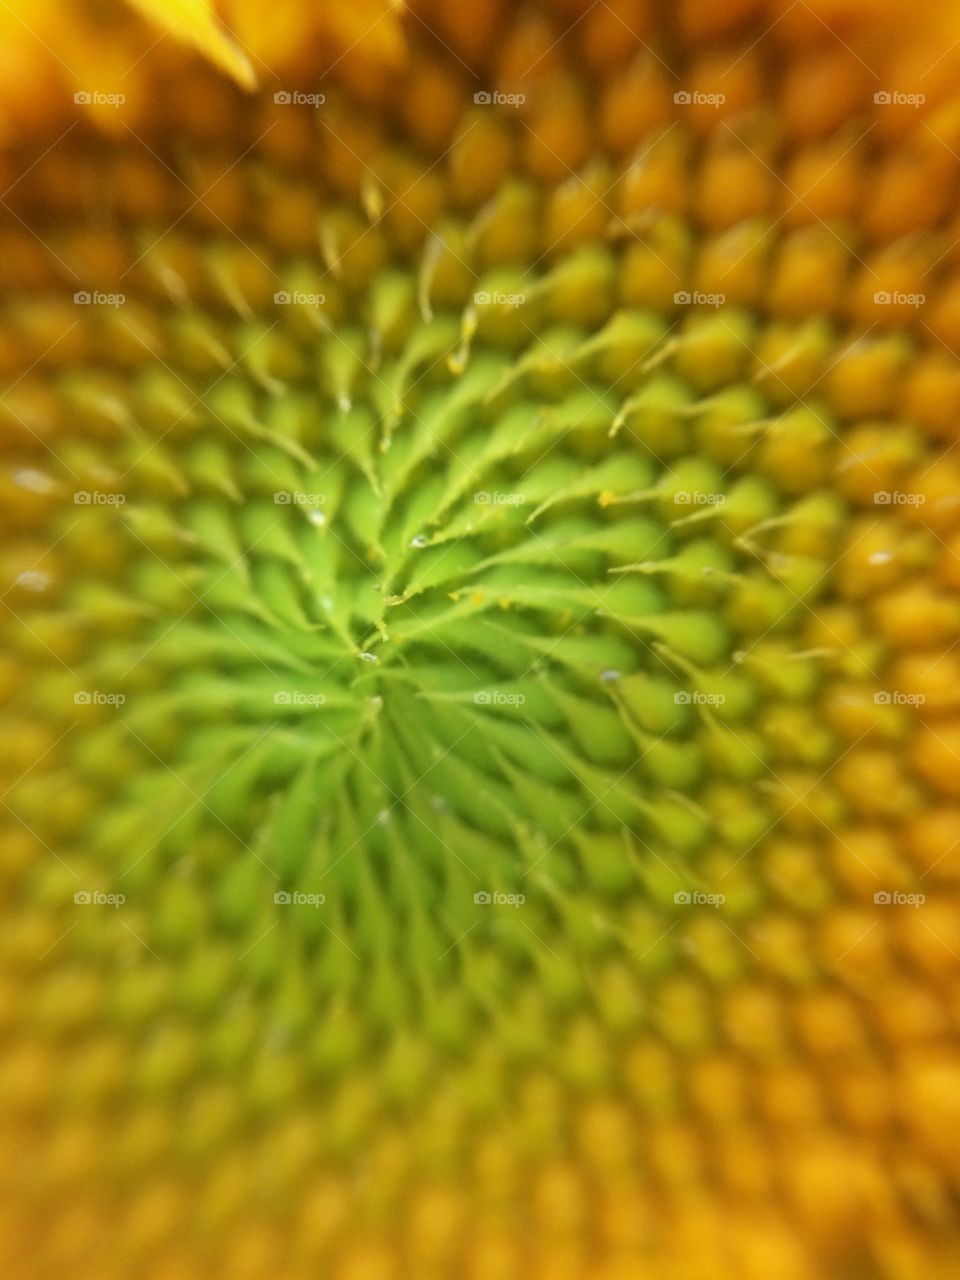 Sunflower designs. Close up of the center of a sunflower. 